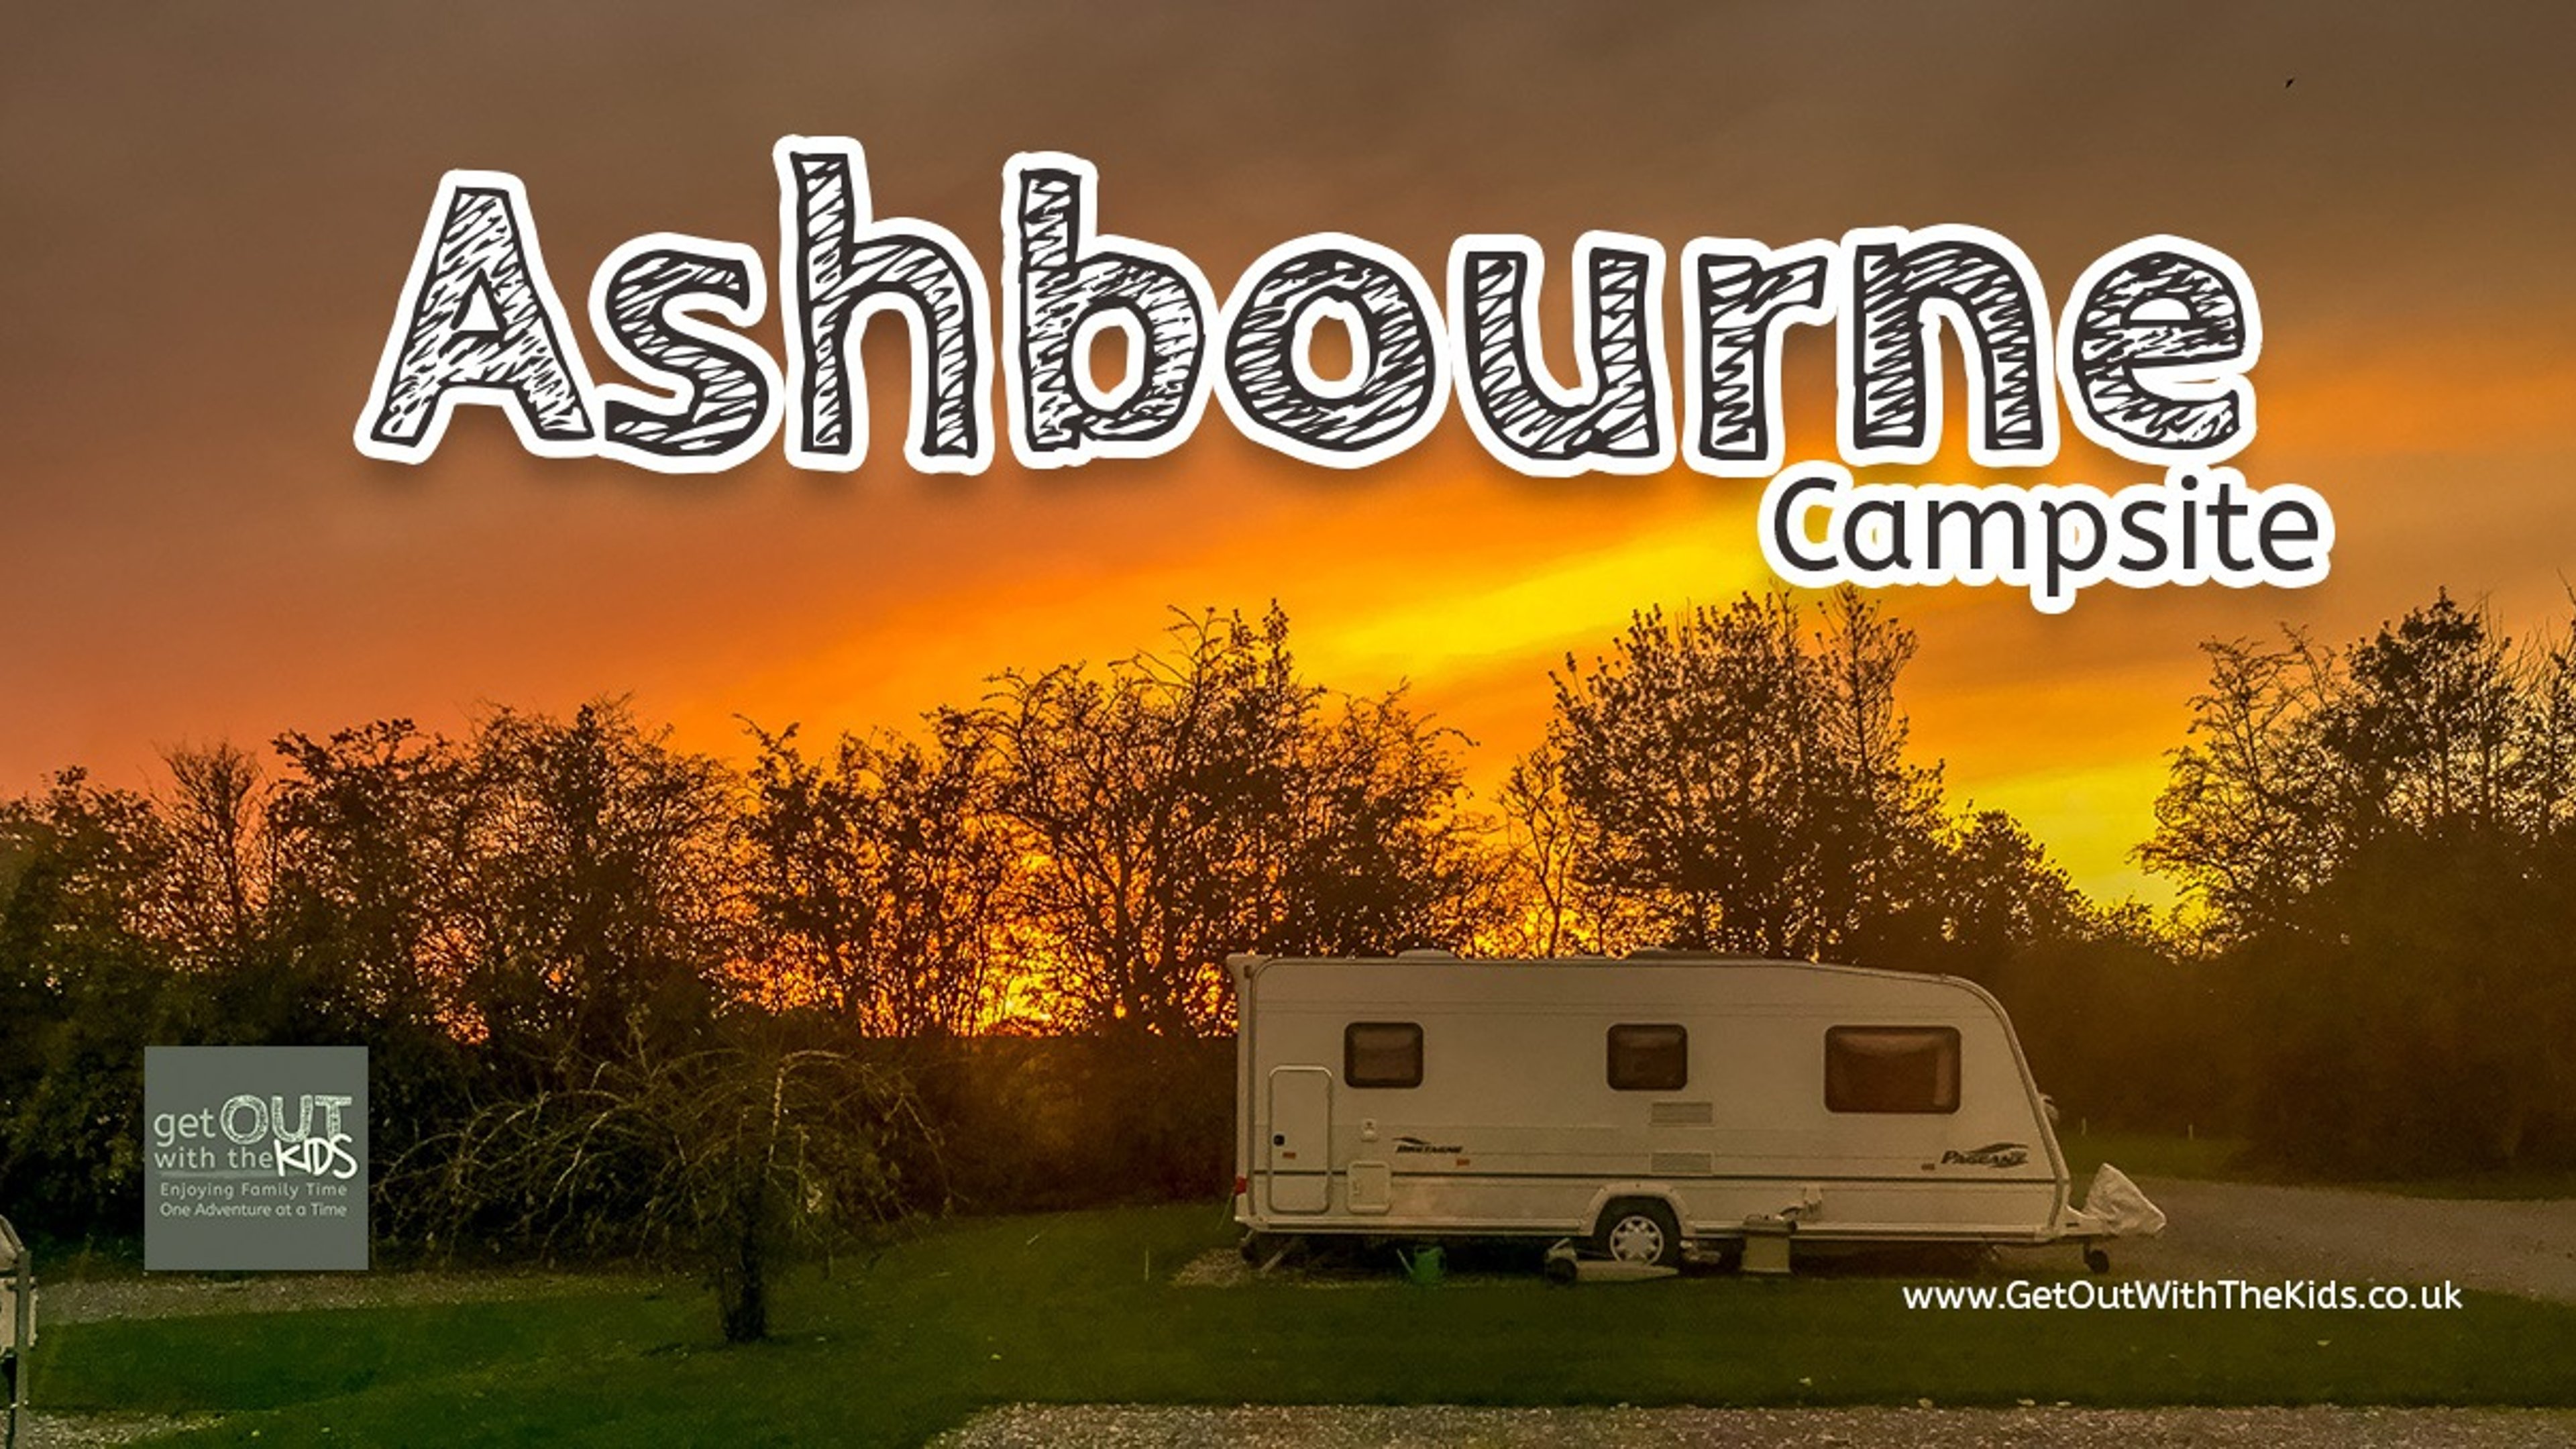 Ashbourne Campsite